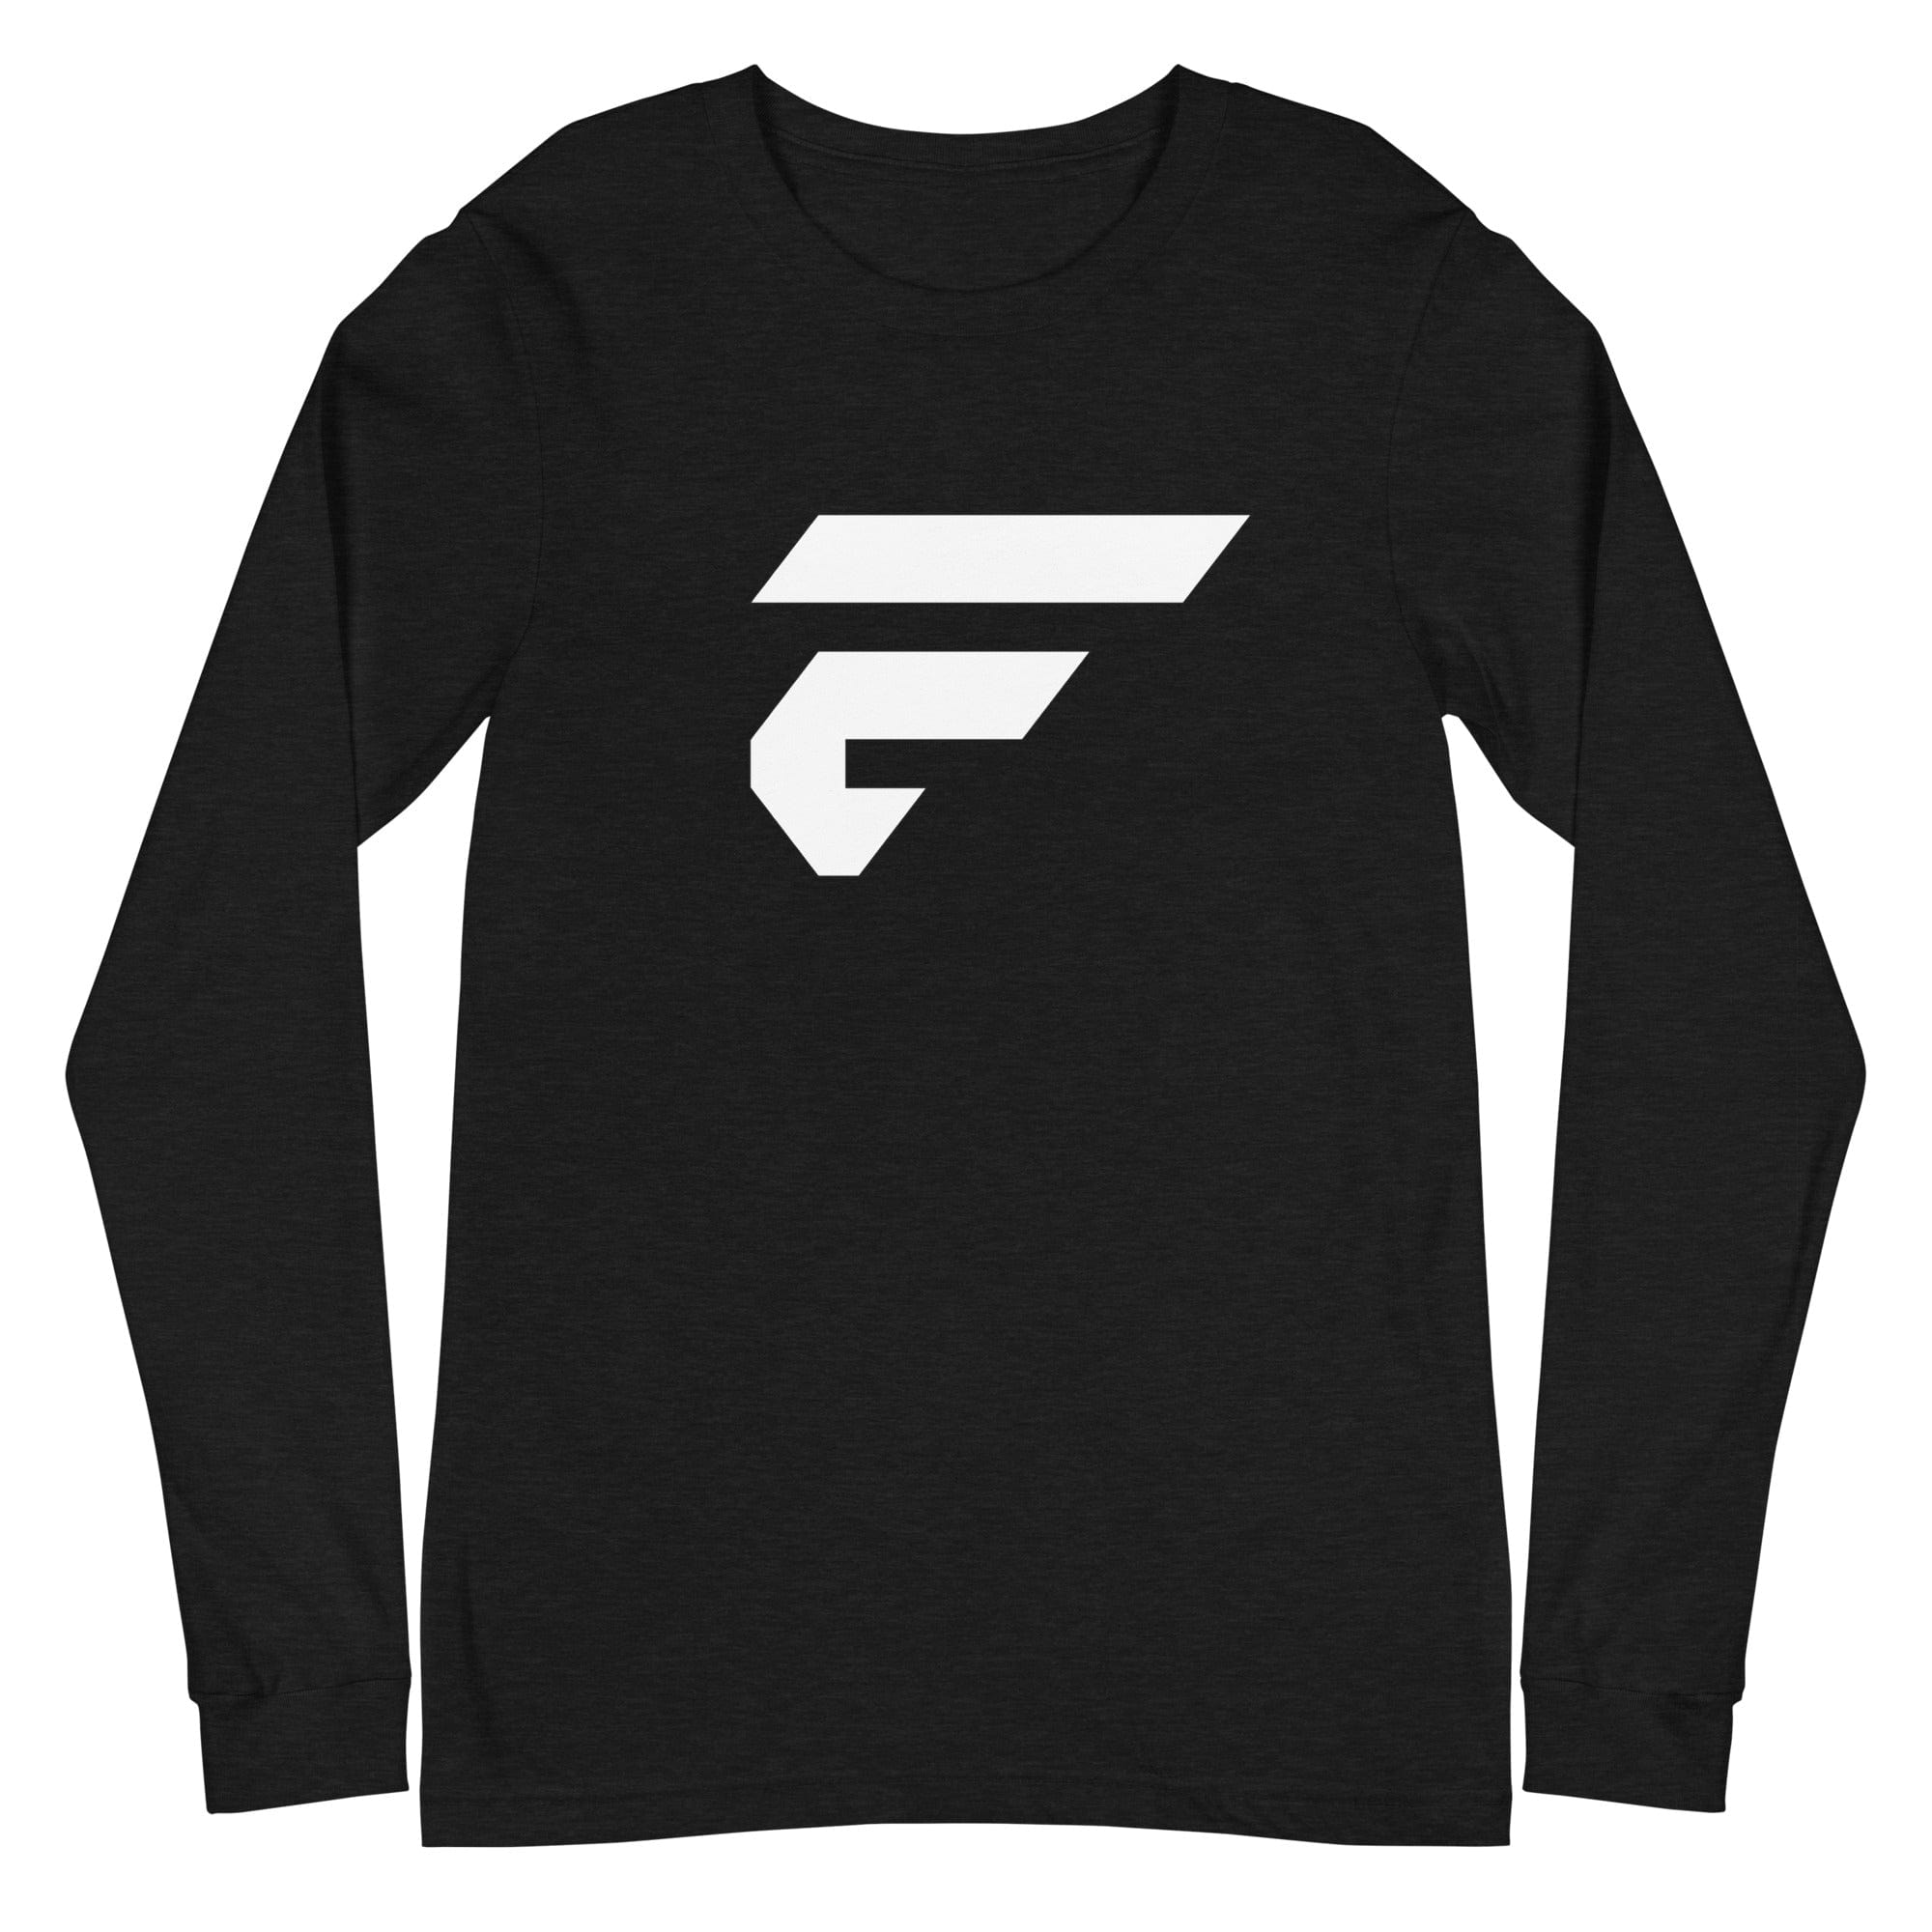 Black unisex cotton longsleeve shirt with Fire Cornhole F logo in white